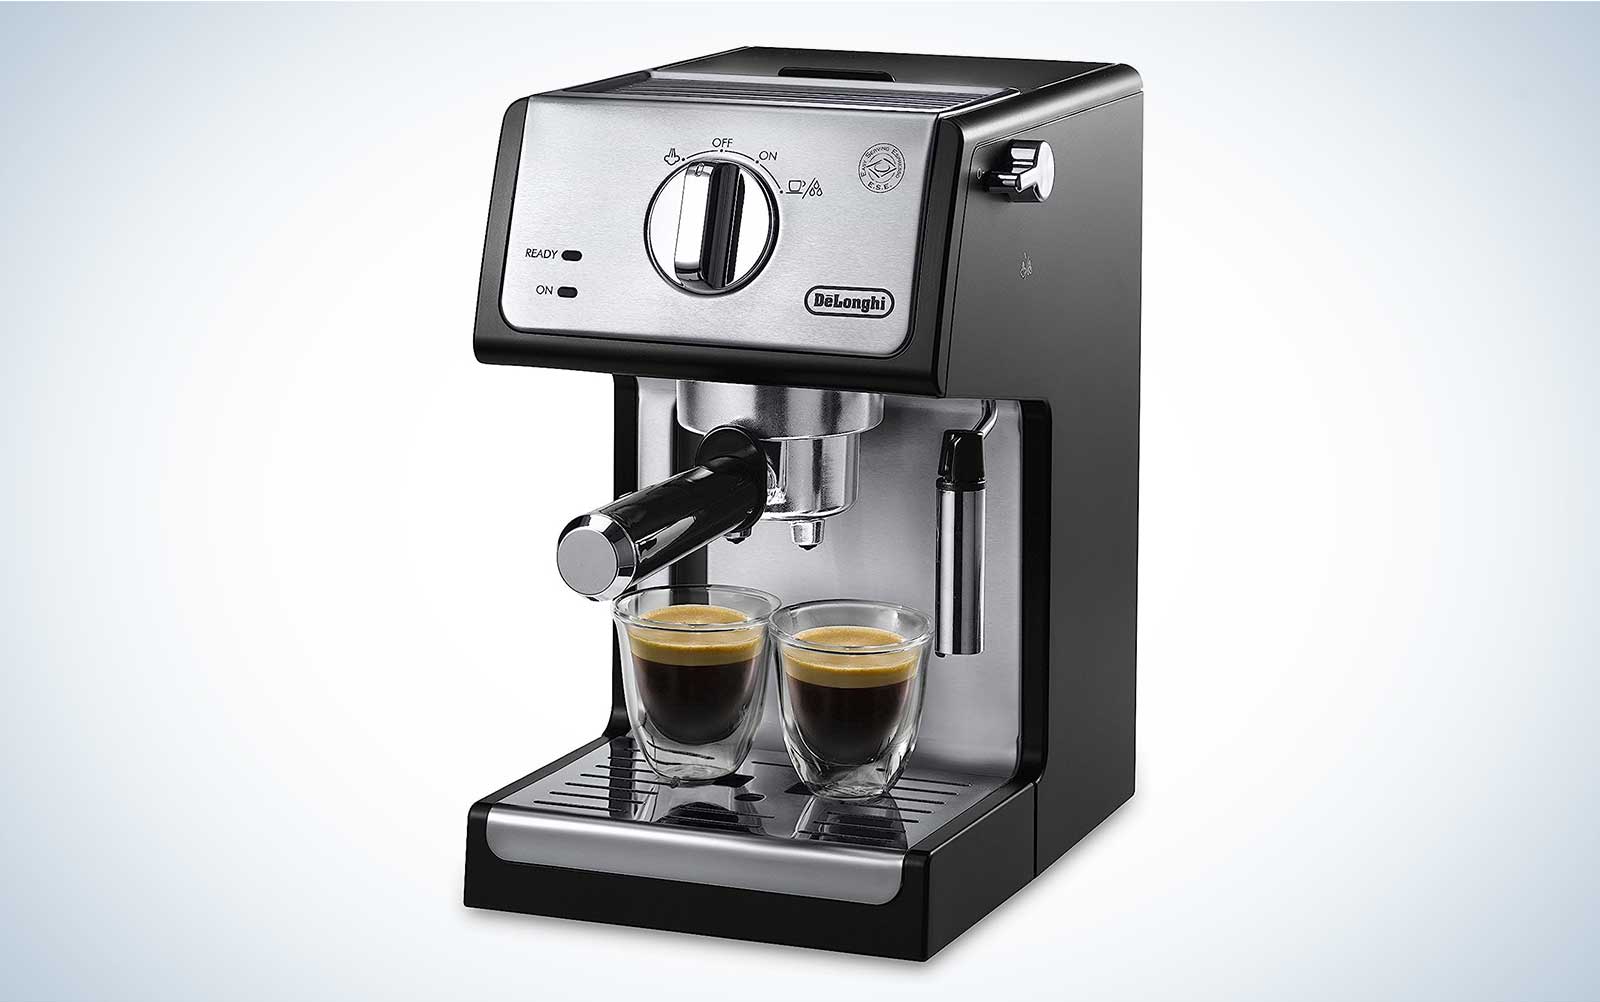 https://www.popsci.com/uploads/2023/11/23/delonghi-espresso-capuccino-maker-black-friday.jpg?auto=webp&width=800&crop=16:10,offset-x50